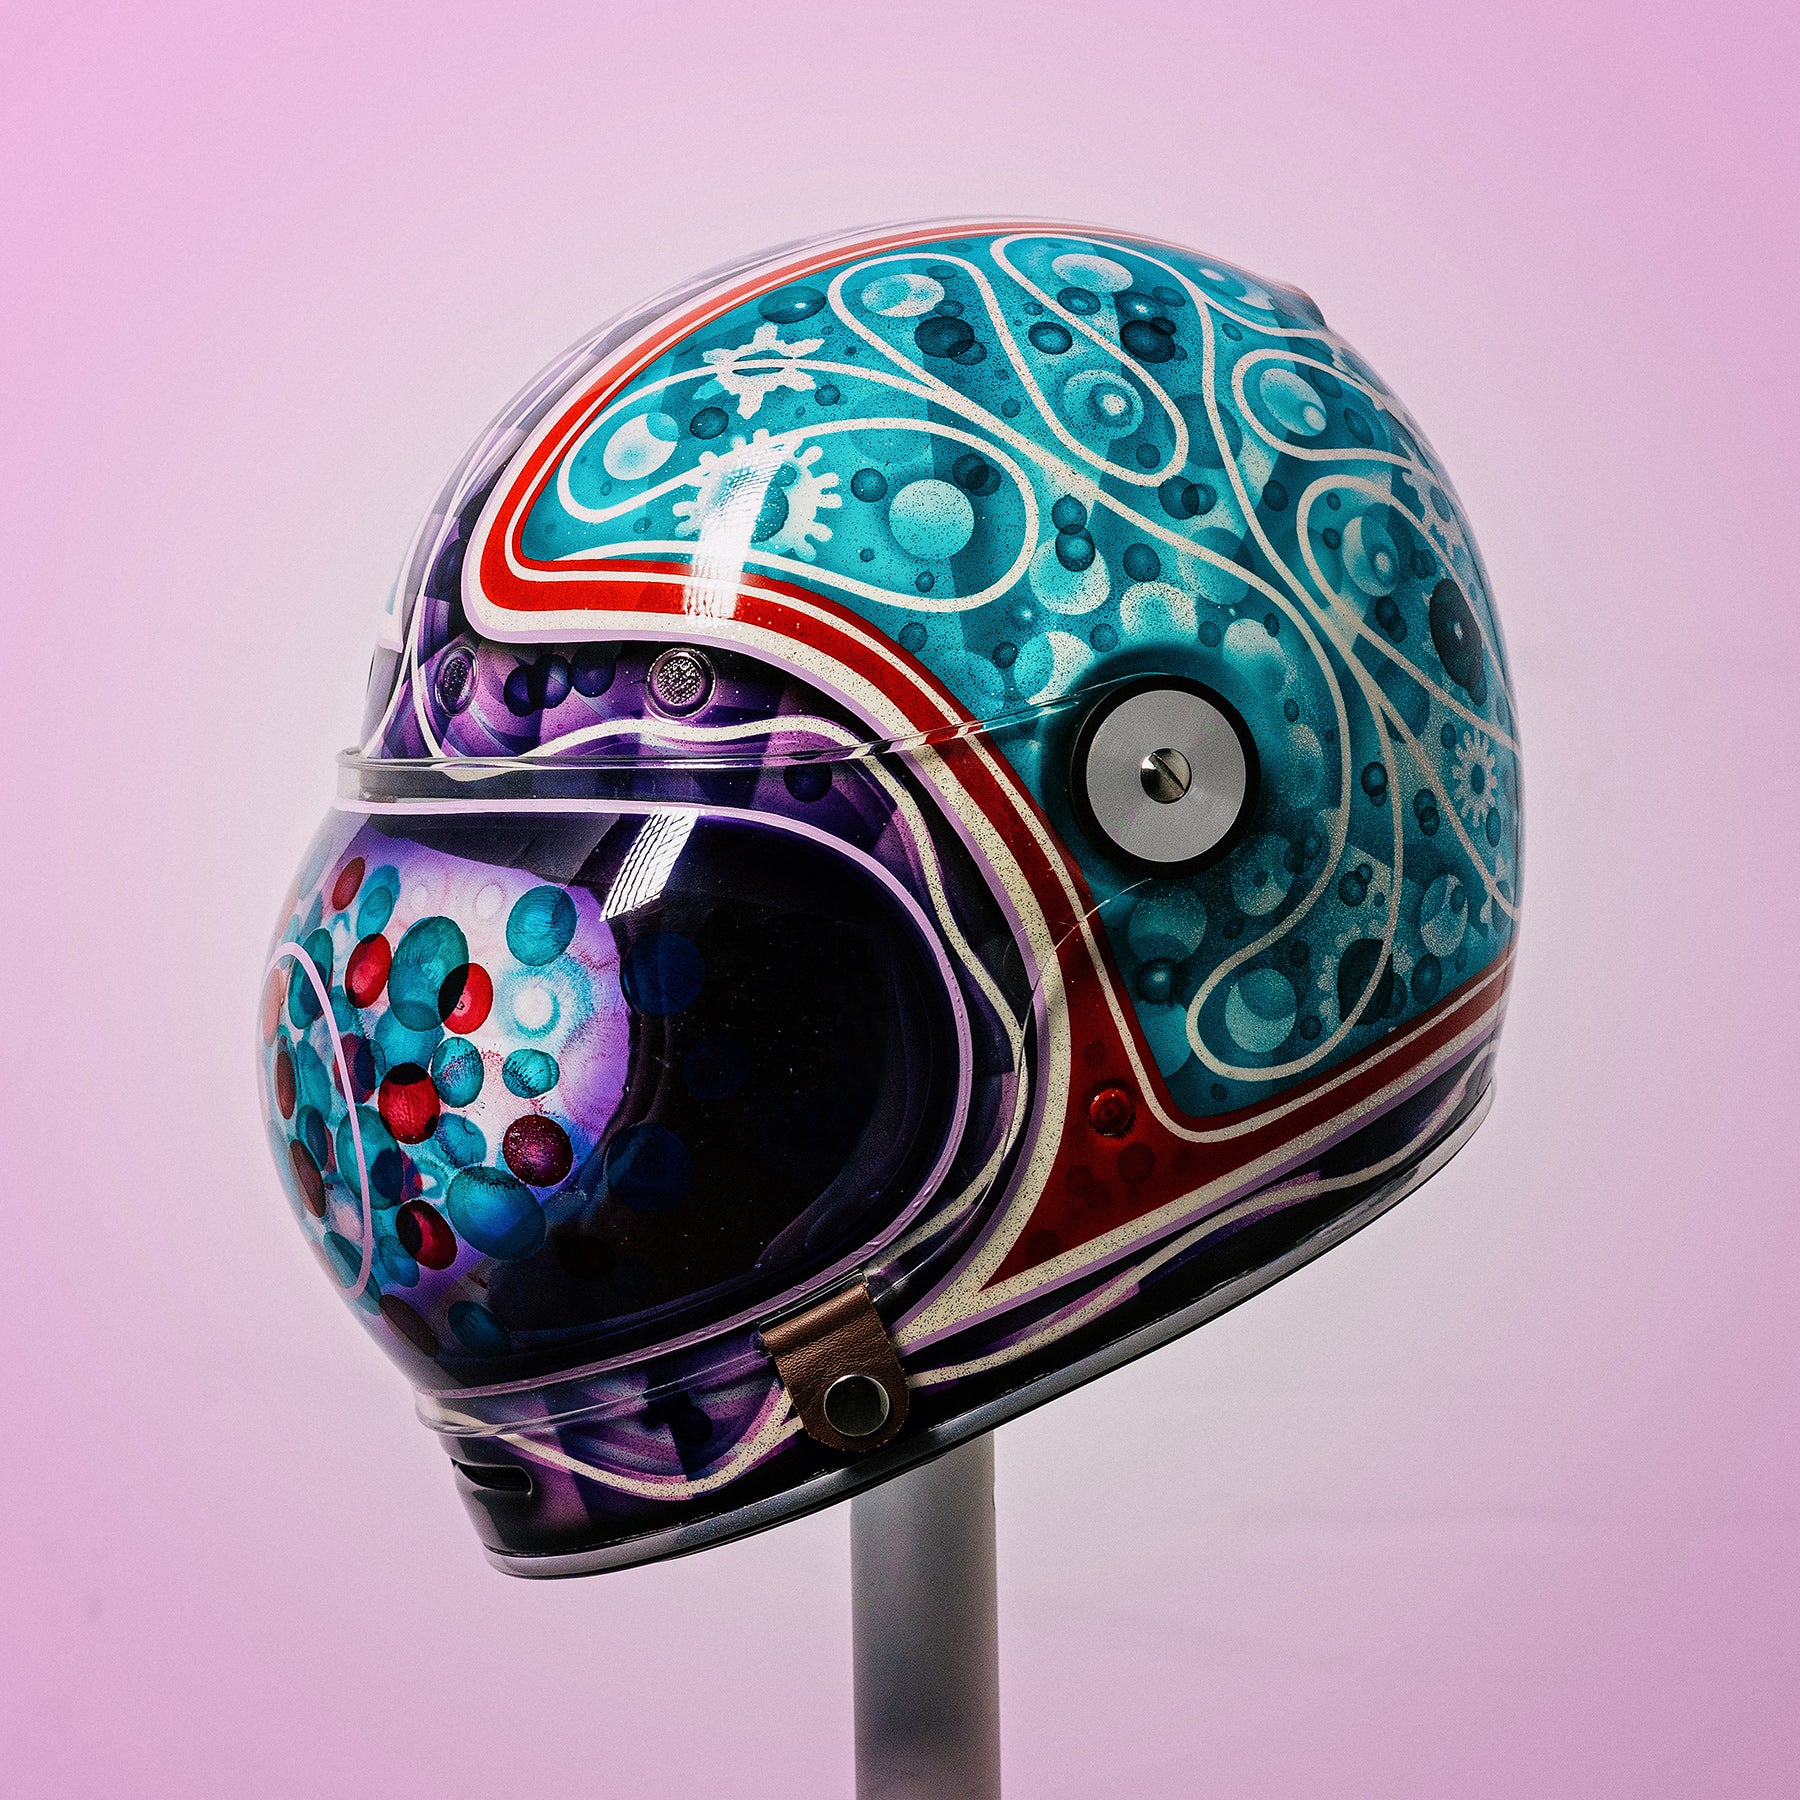 Trippy Ten Helmet Art Show Pittsburgh Skratch